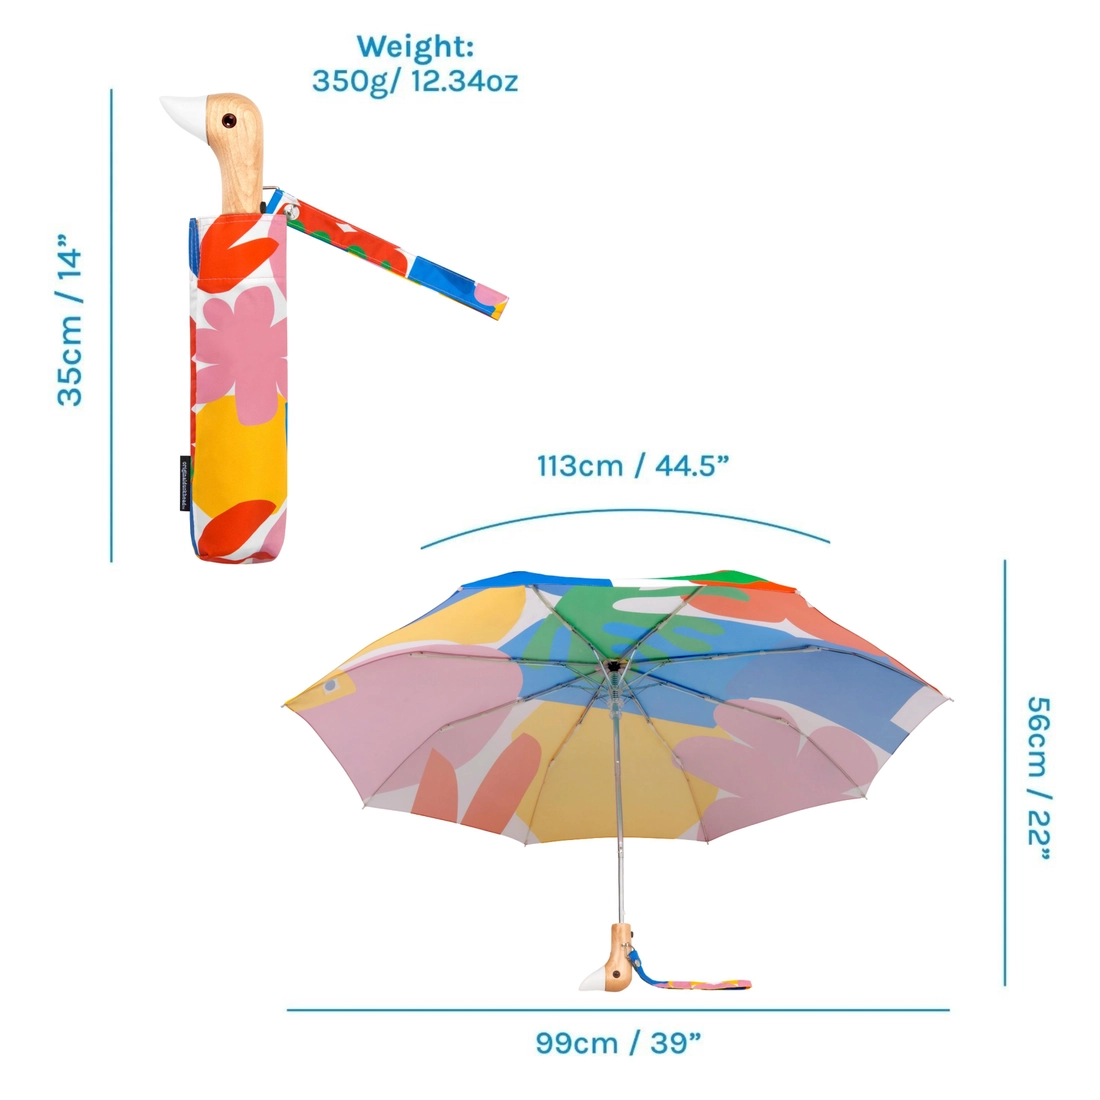 ORIGINAL DUCKHEAD EU handgefertigter Regenschirm mit Entenkopf MATISSE | kompakt & nachhaltig